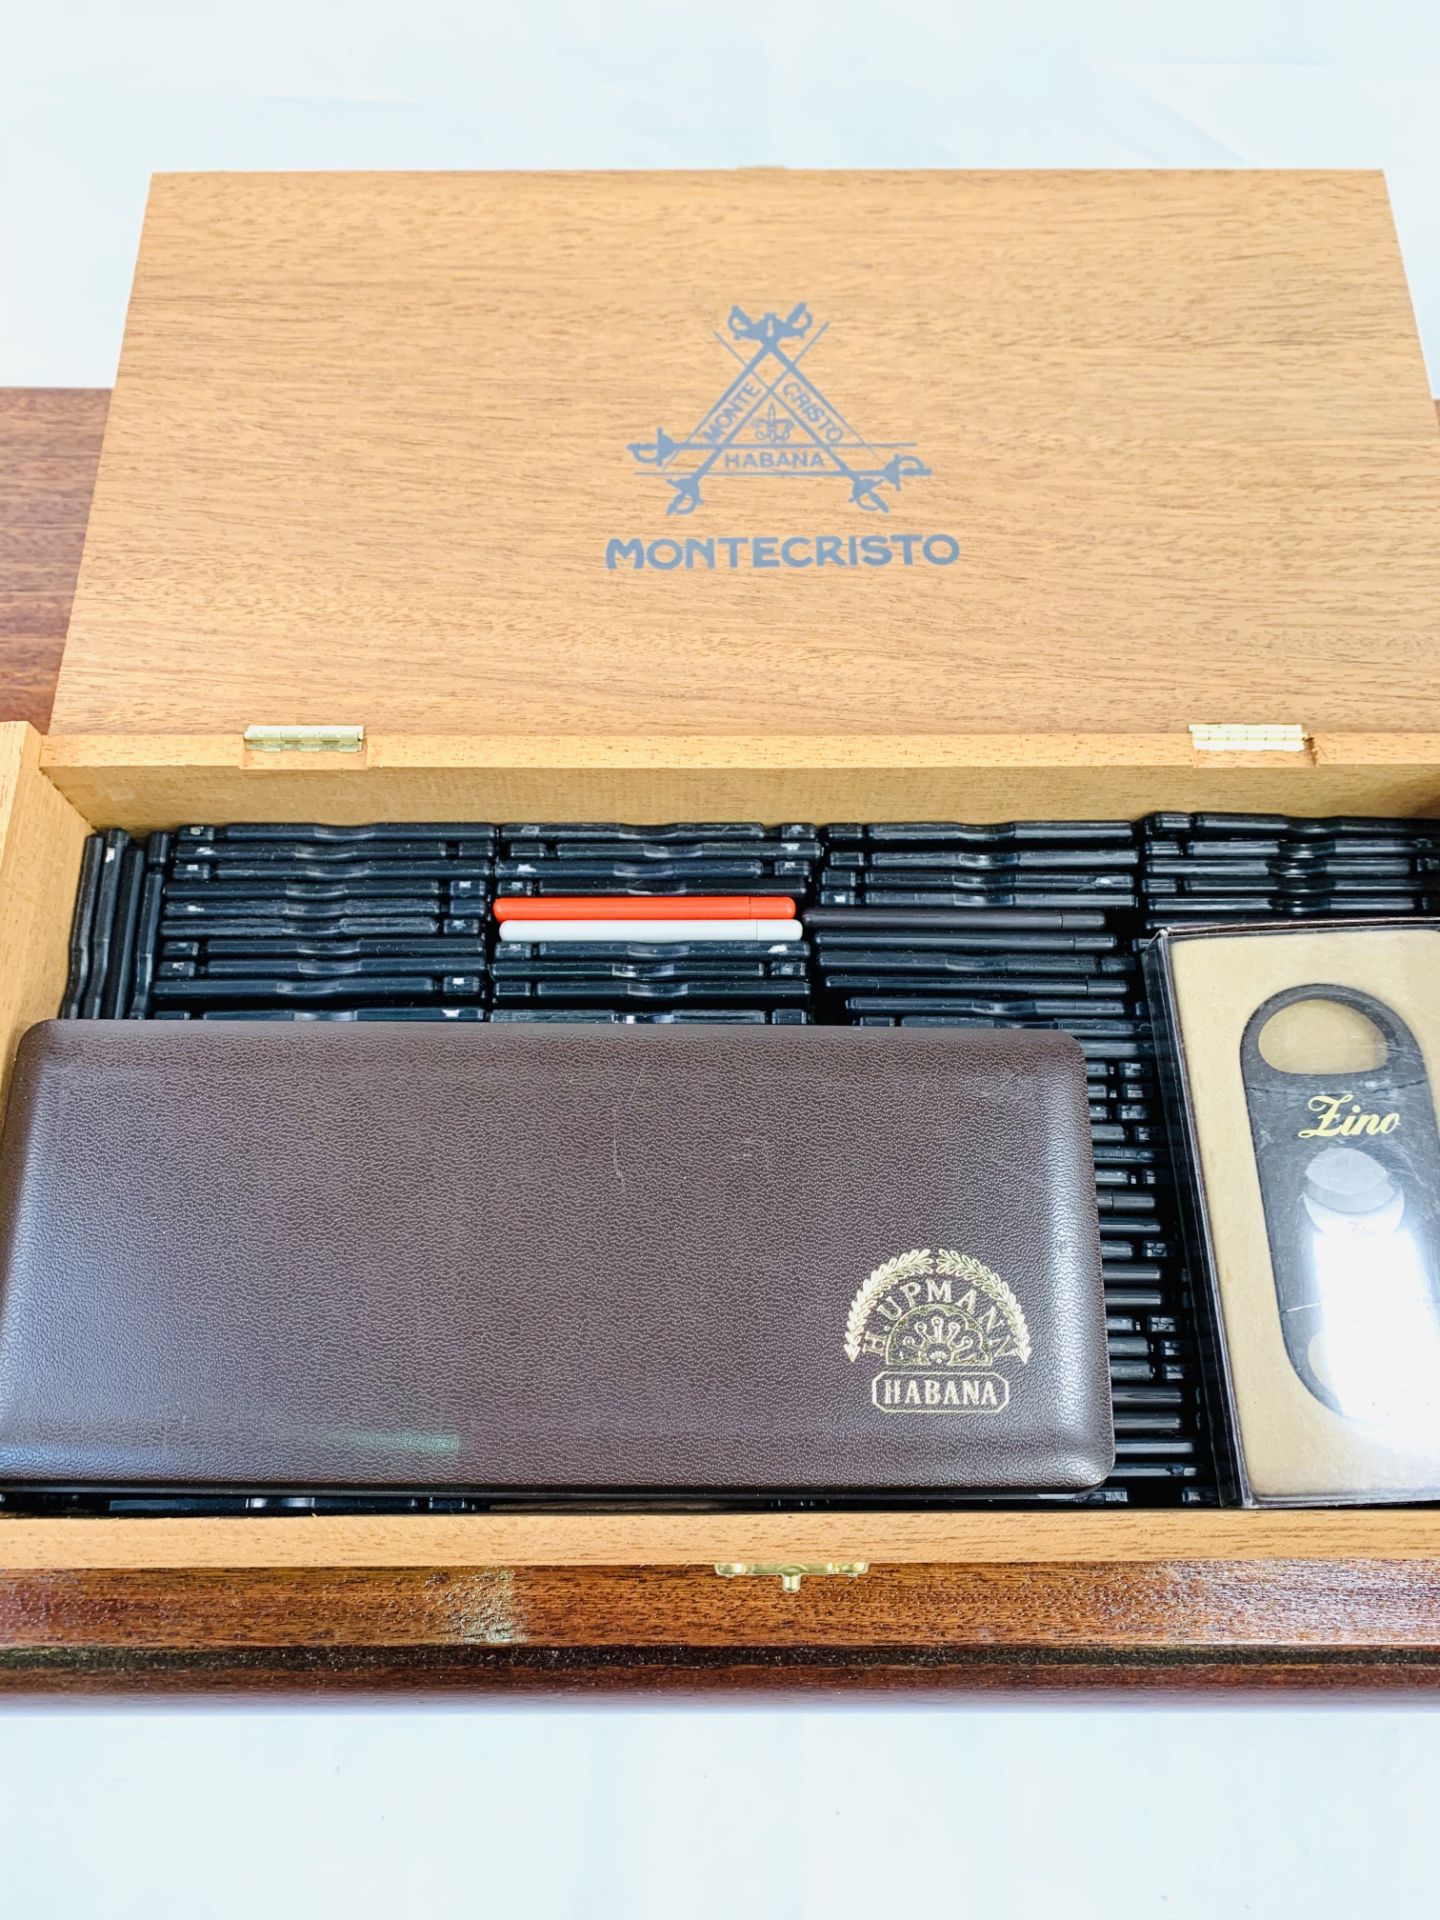 Montecristo cigar humidor - Image 3 of 3